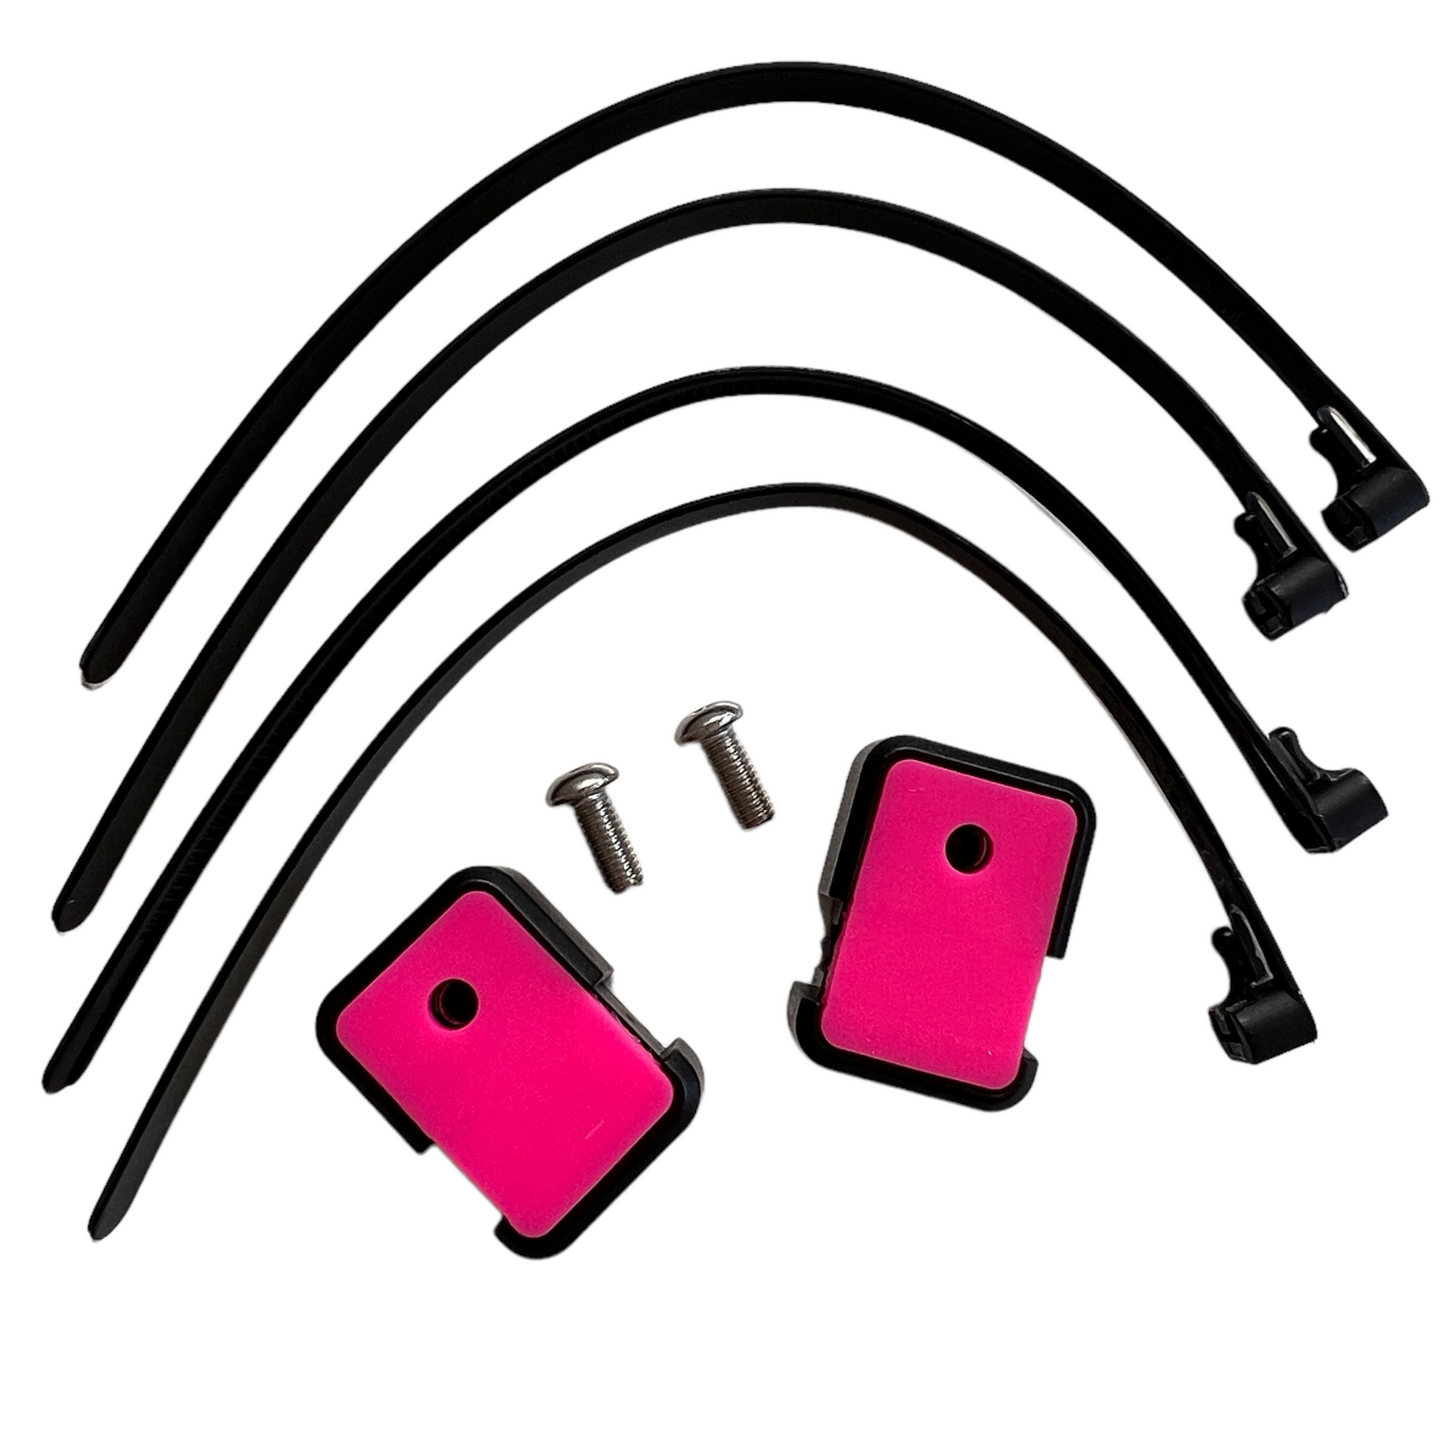 Adjustable Bracket Mount Mobility & Accessibility SPIRIT SPARKPLUGS Double Unit Pink 